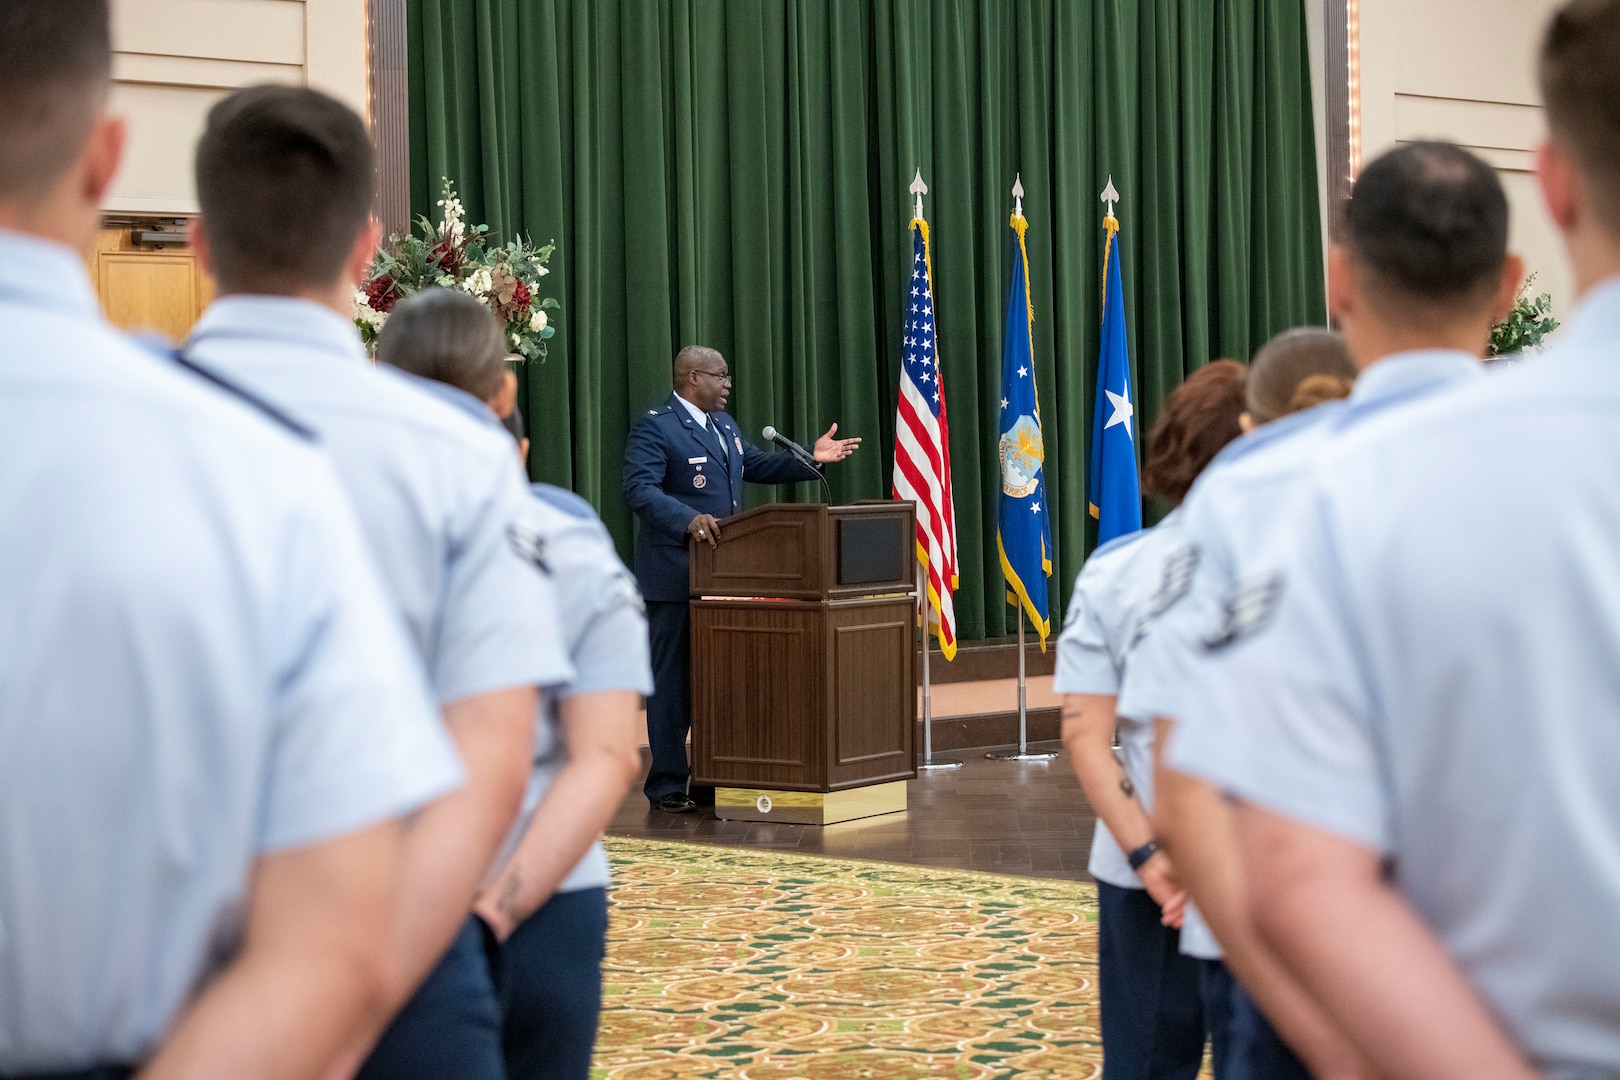 Air Force commander speaks at podium